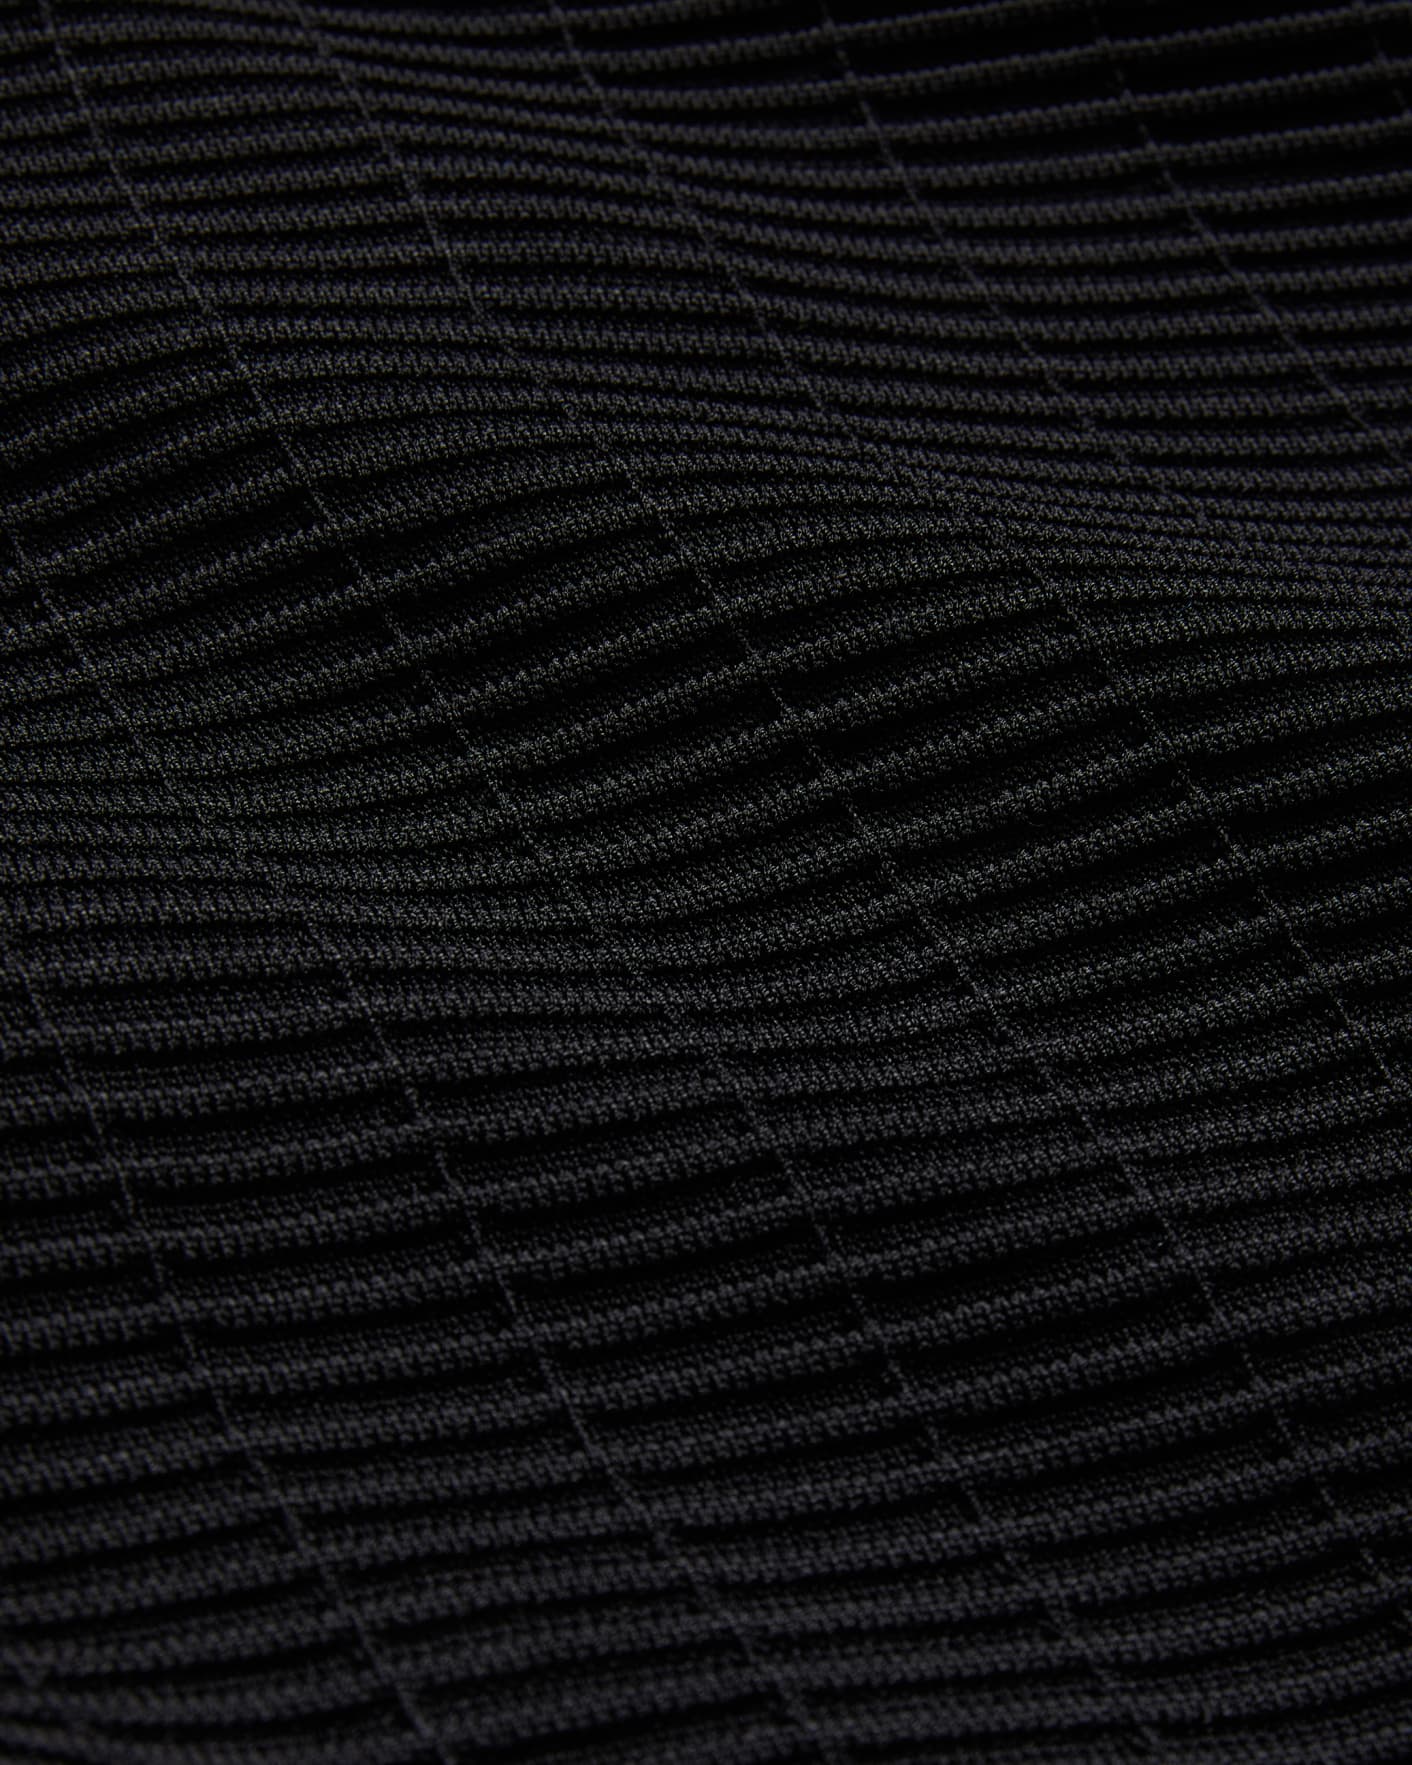 Buy Latinia Textured A-Line Midi Dress Black Ted Baker KSA